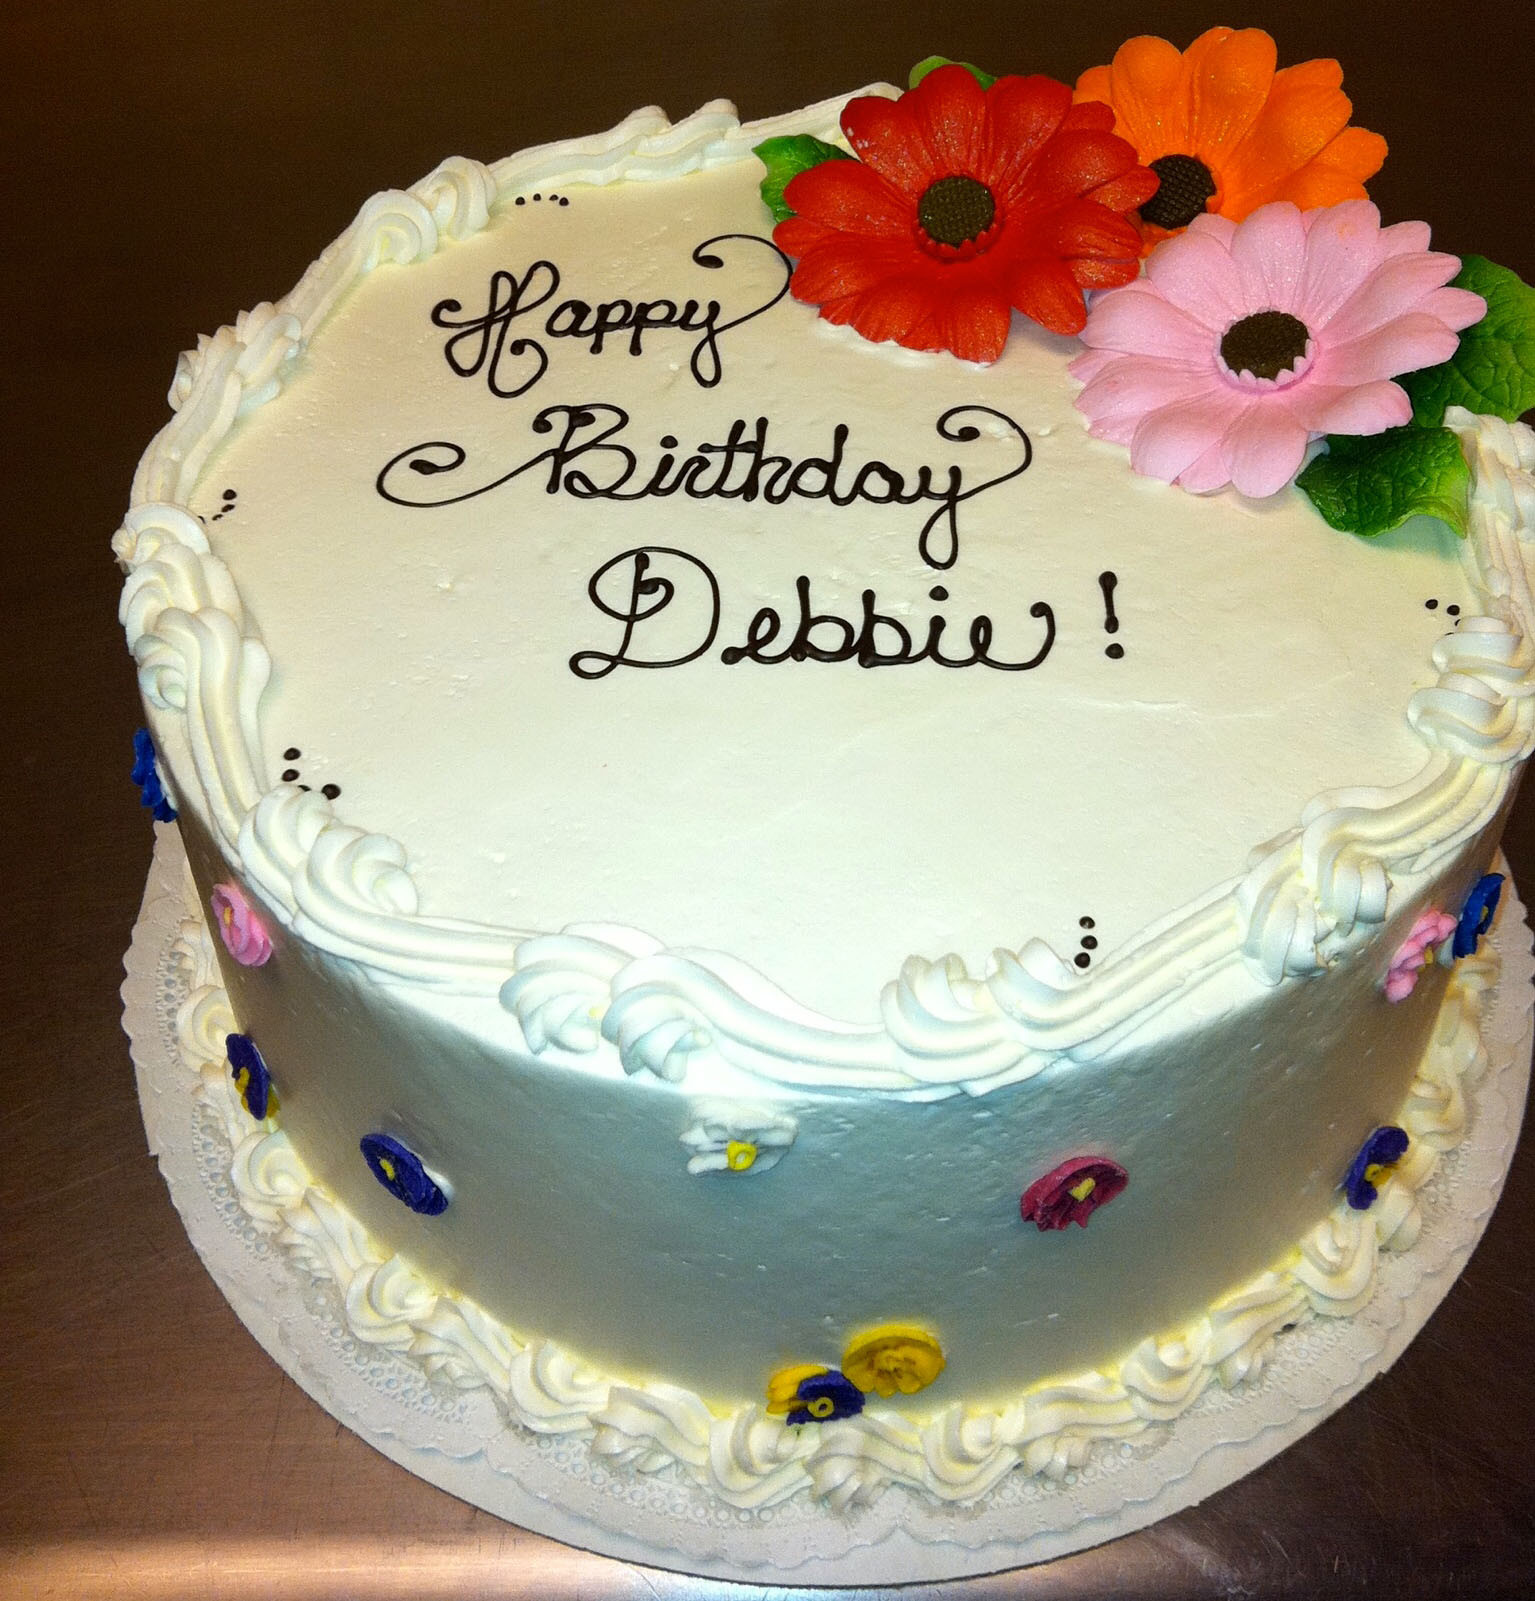 Best ideas about Happy Birthday Debbie Cake
. Save or Pin Happy Birthday Debbie Now.